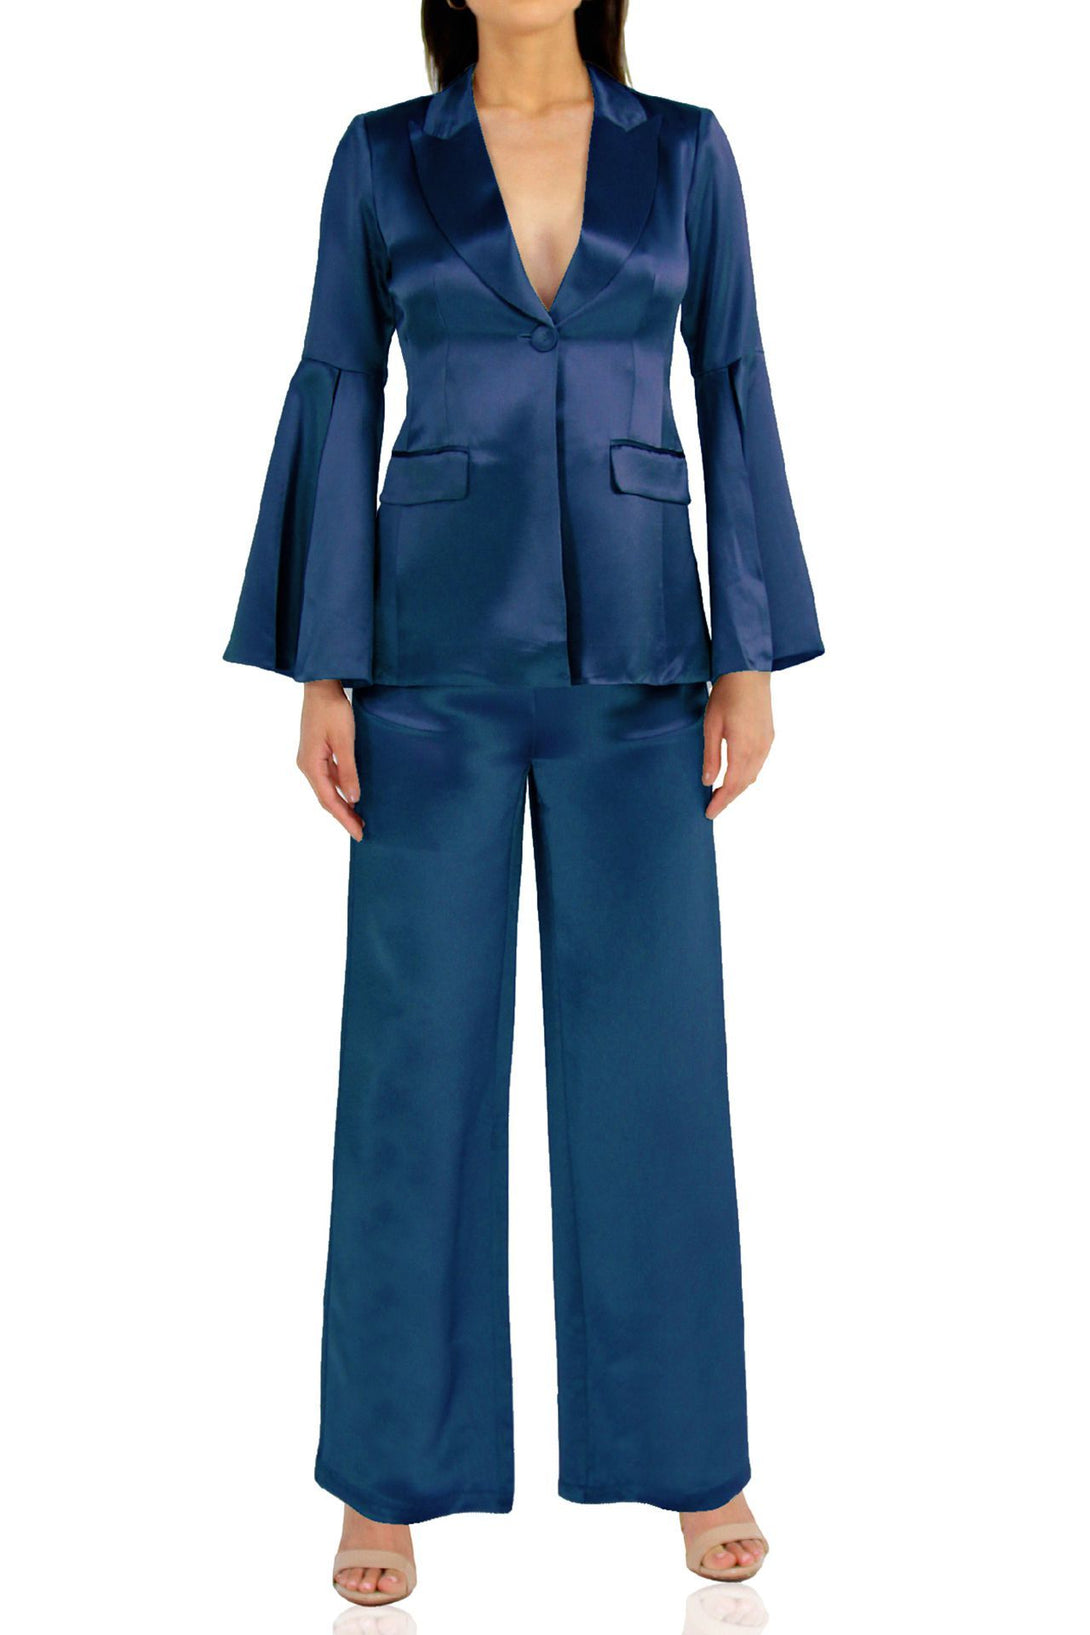 Designer-Women-Jacket-In-Blue-By-Kyle-Richards